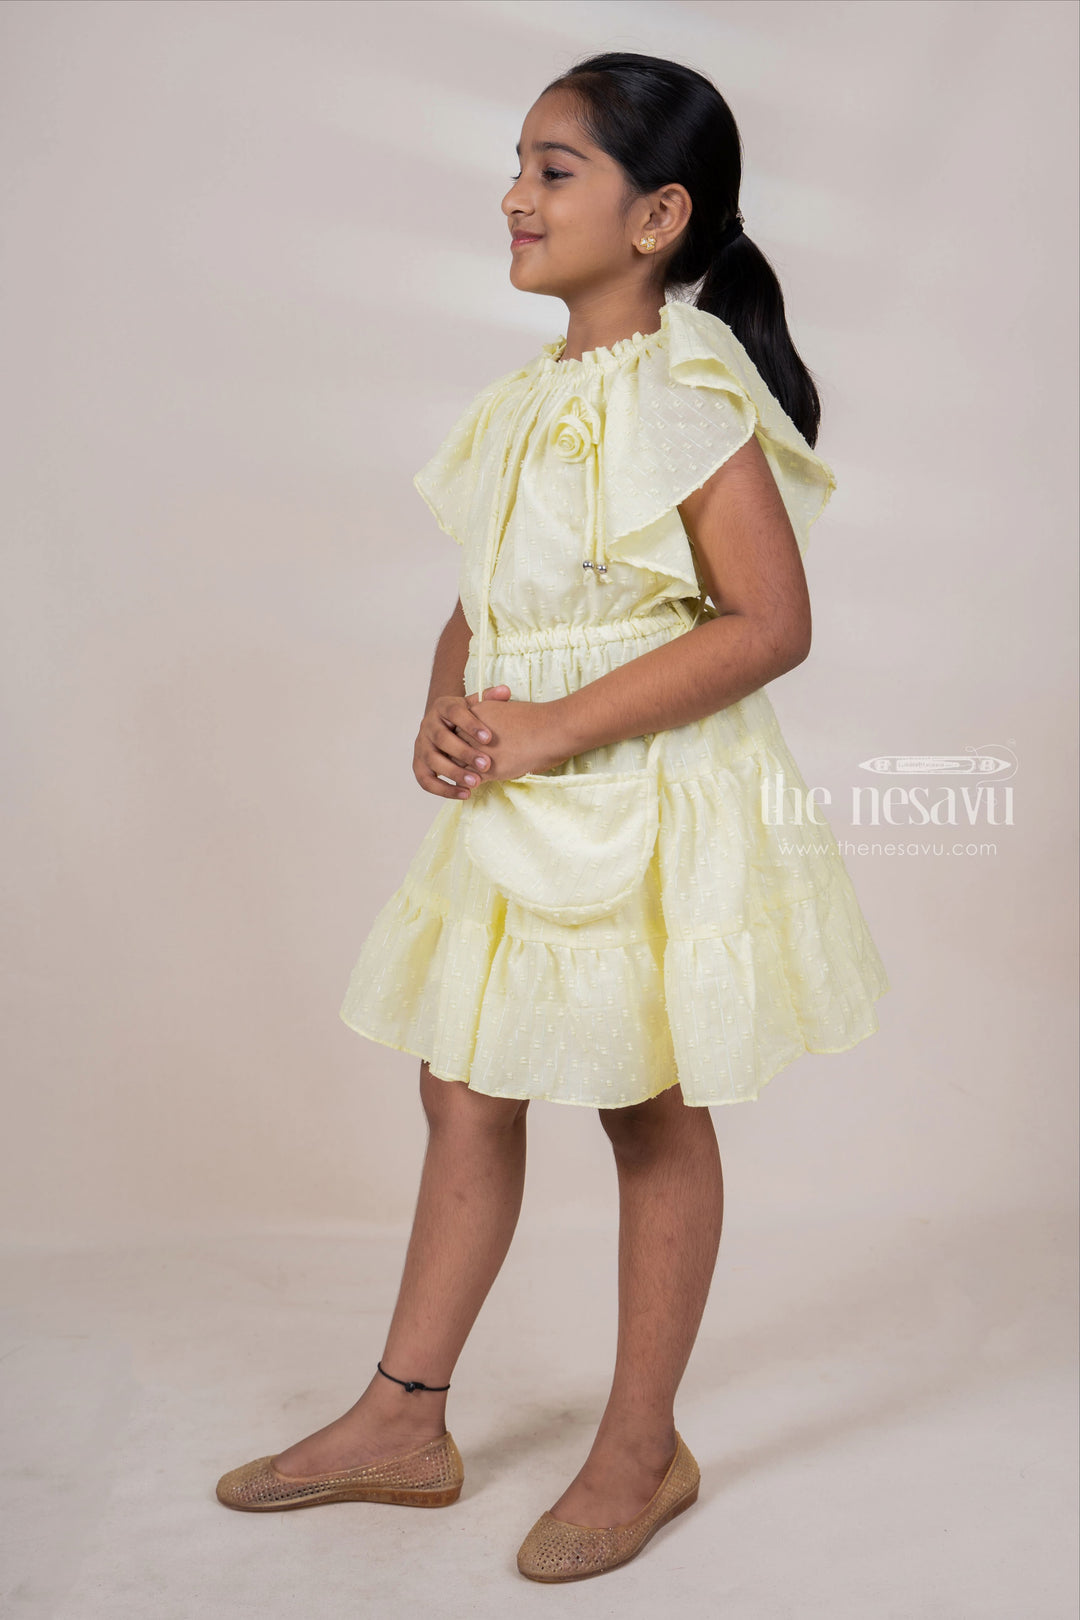 The Nesavu Frocks & Dresses Yellow Off-Shoulder Designed Soft Cotton Frock For Baby Girls With Matching Bag psr silks Nesavu